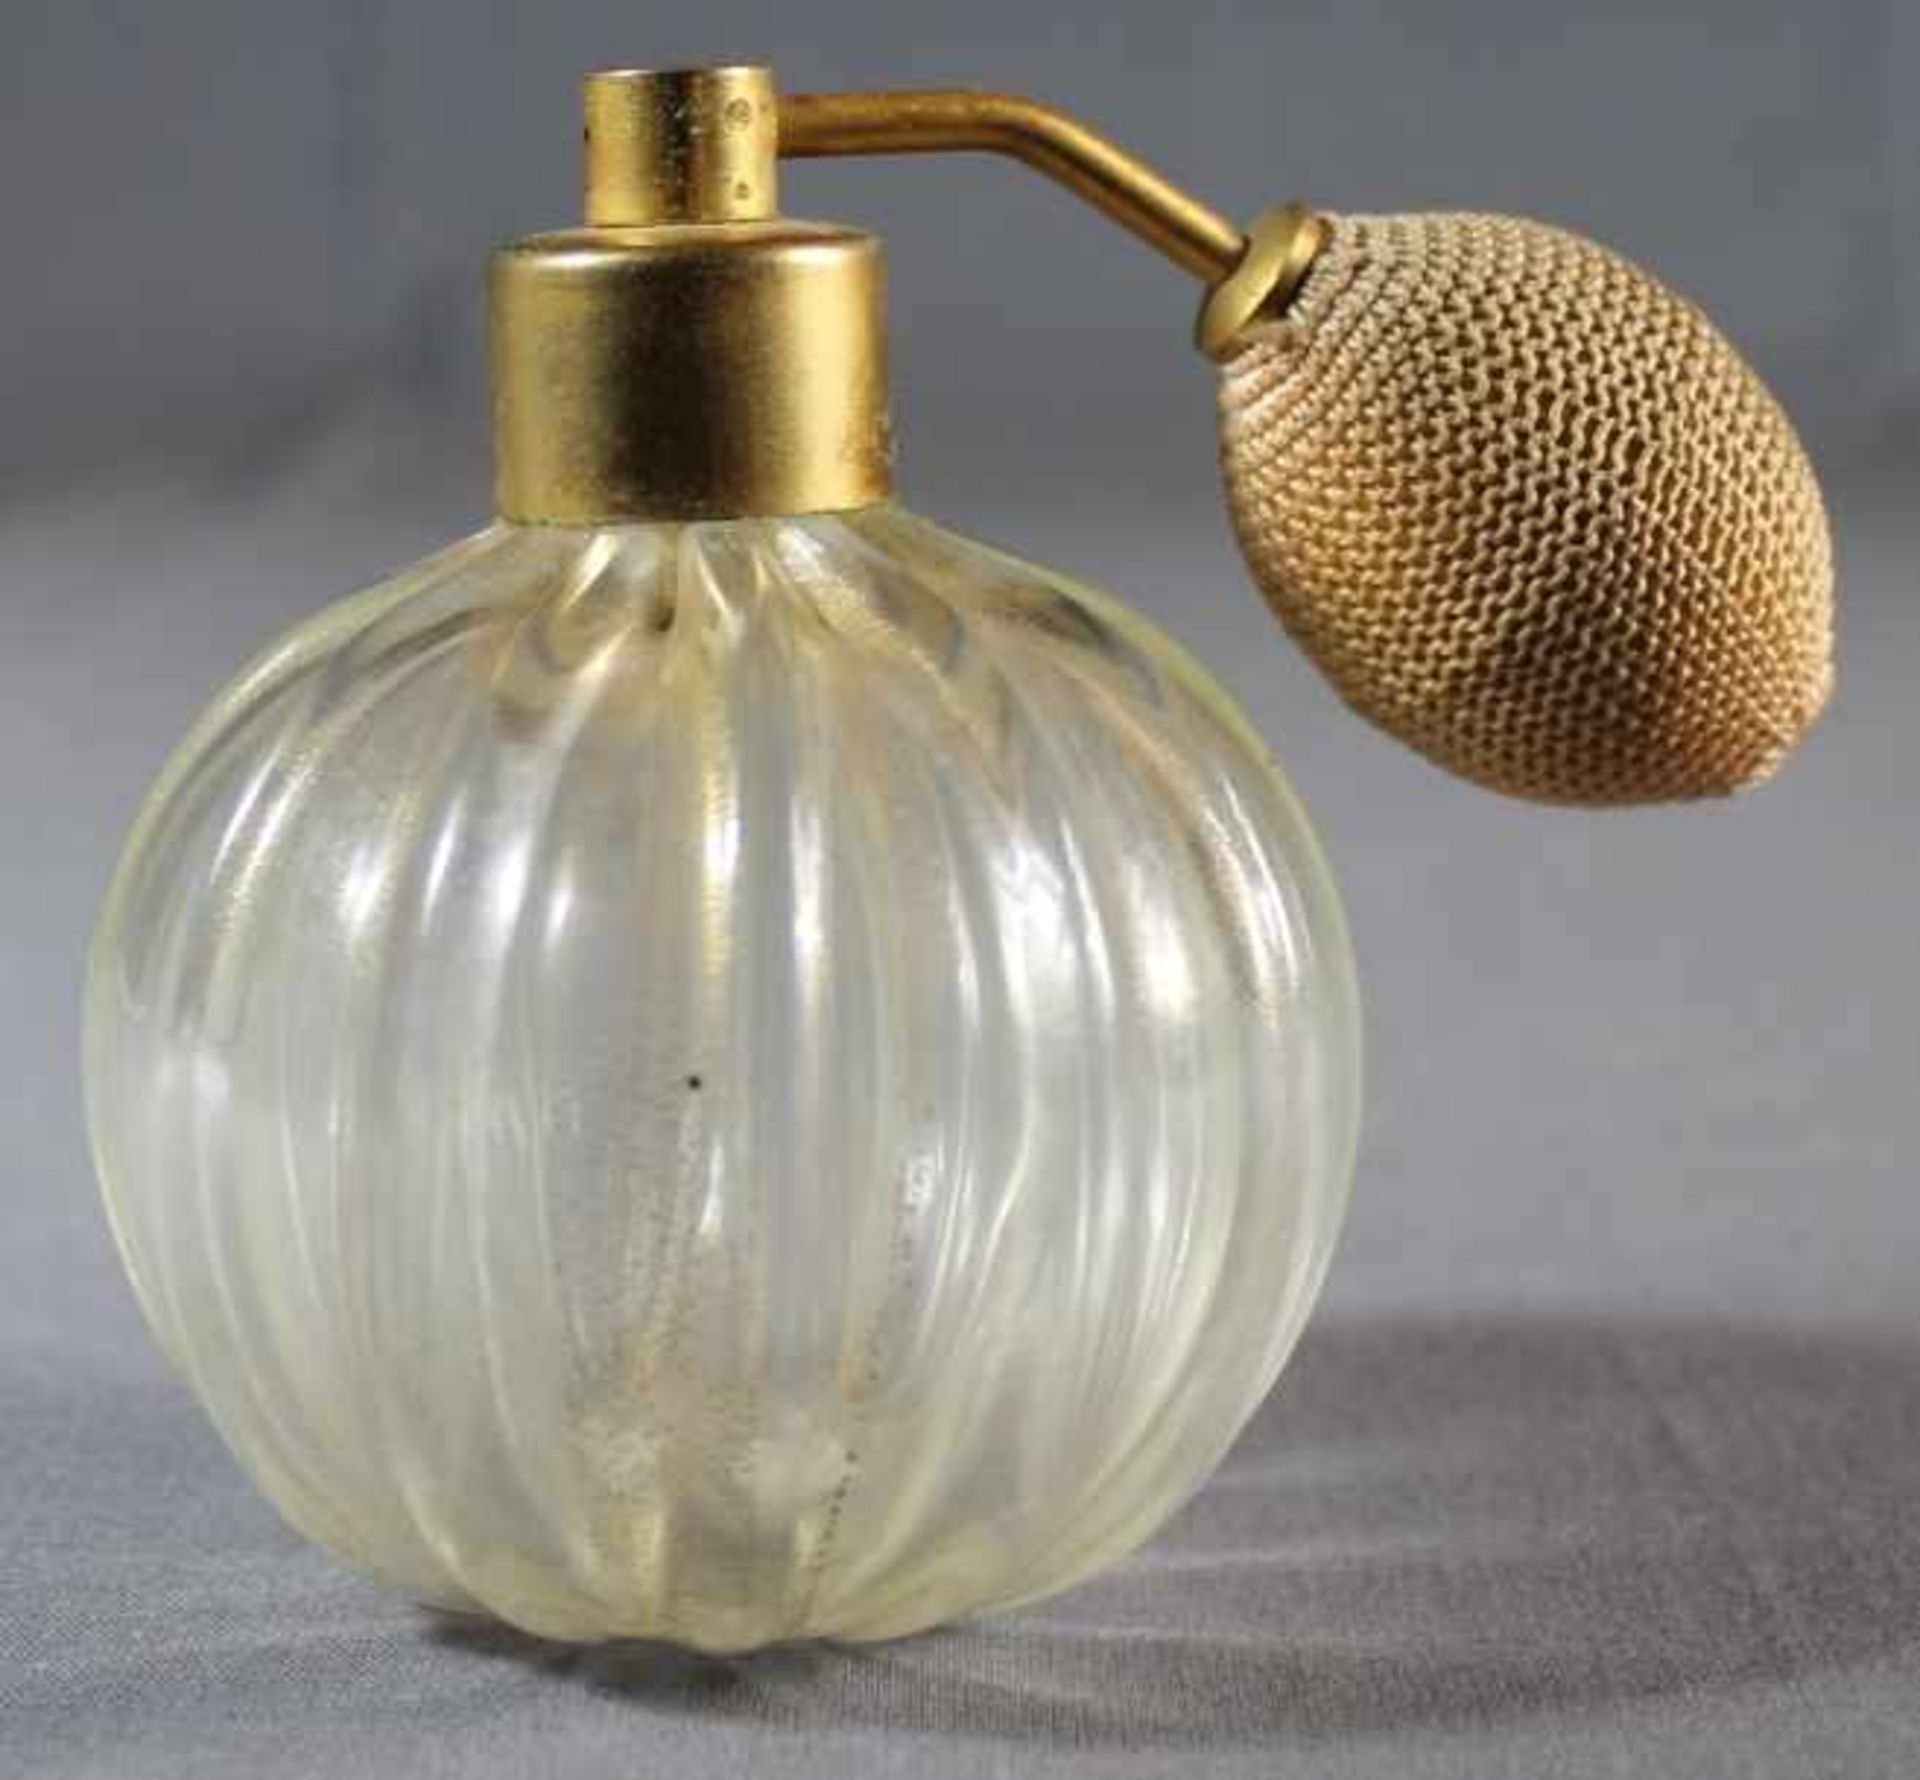 1 Parfumflacon Glas, Kugelform, gerippte Wandung, farbloses Glas mit Goldfluss, H ca. 12cm- - -23.50